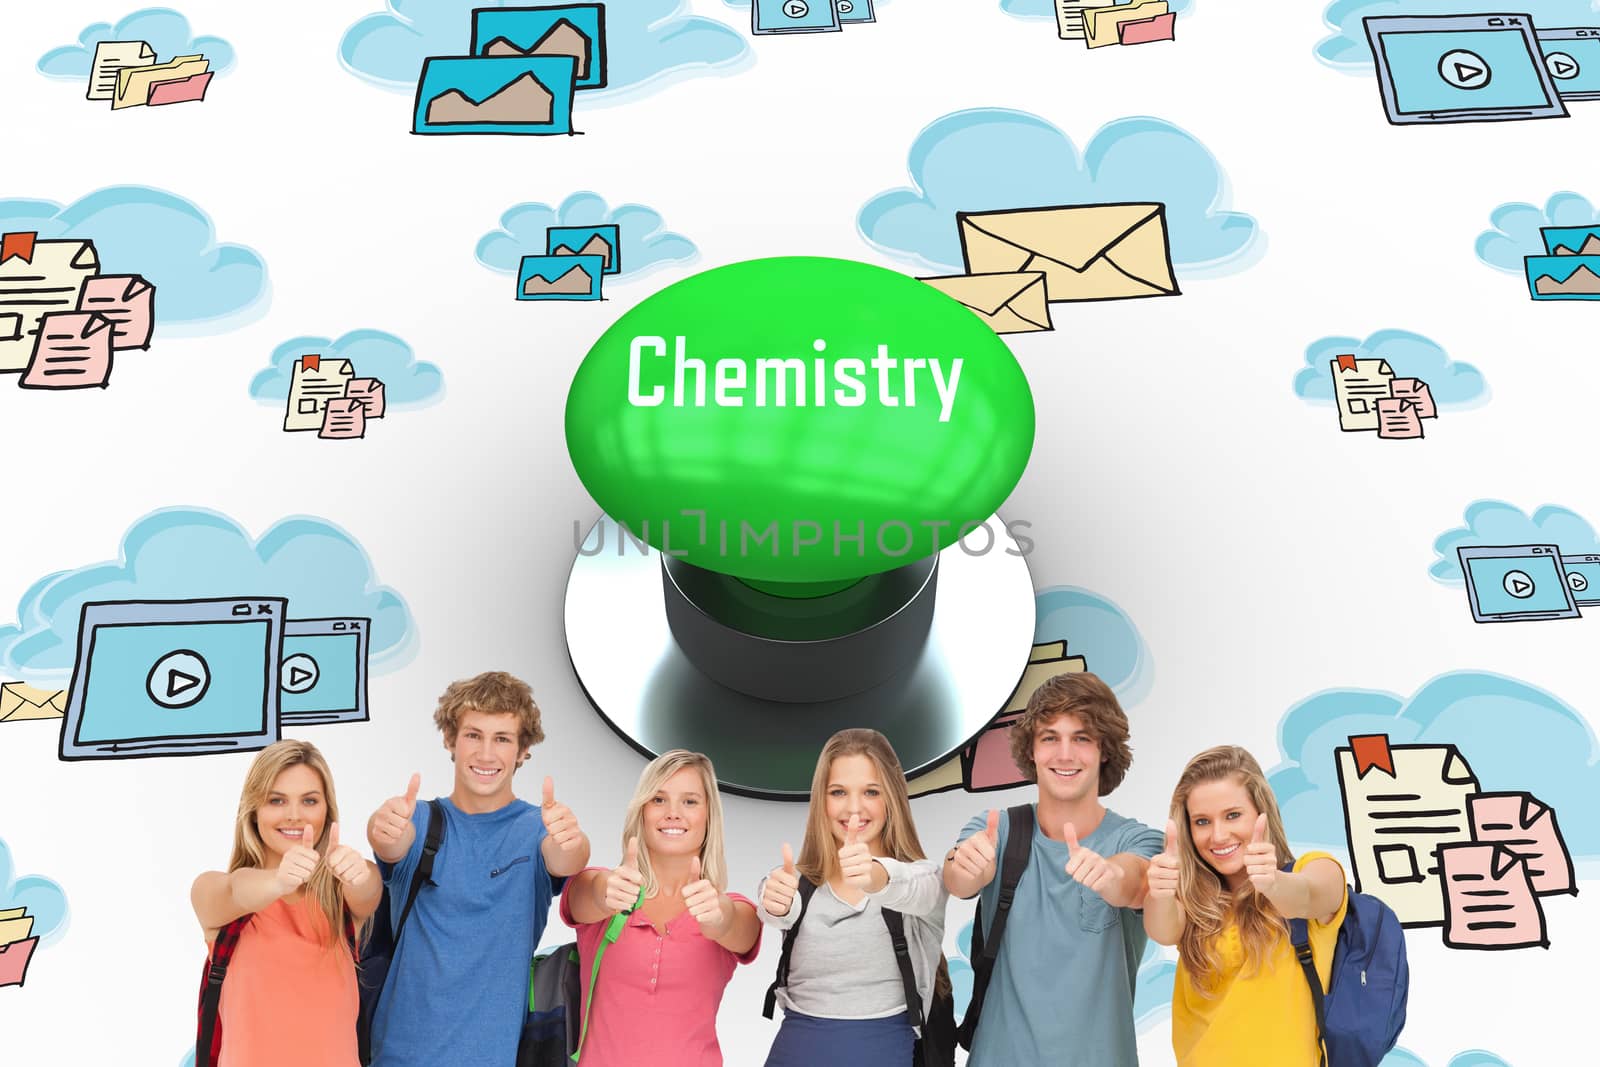 Chemistry against digitally generated green push button by Wavebreakmedia